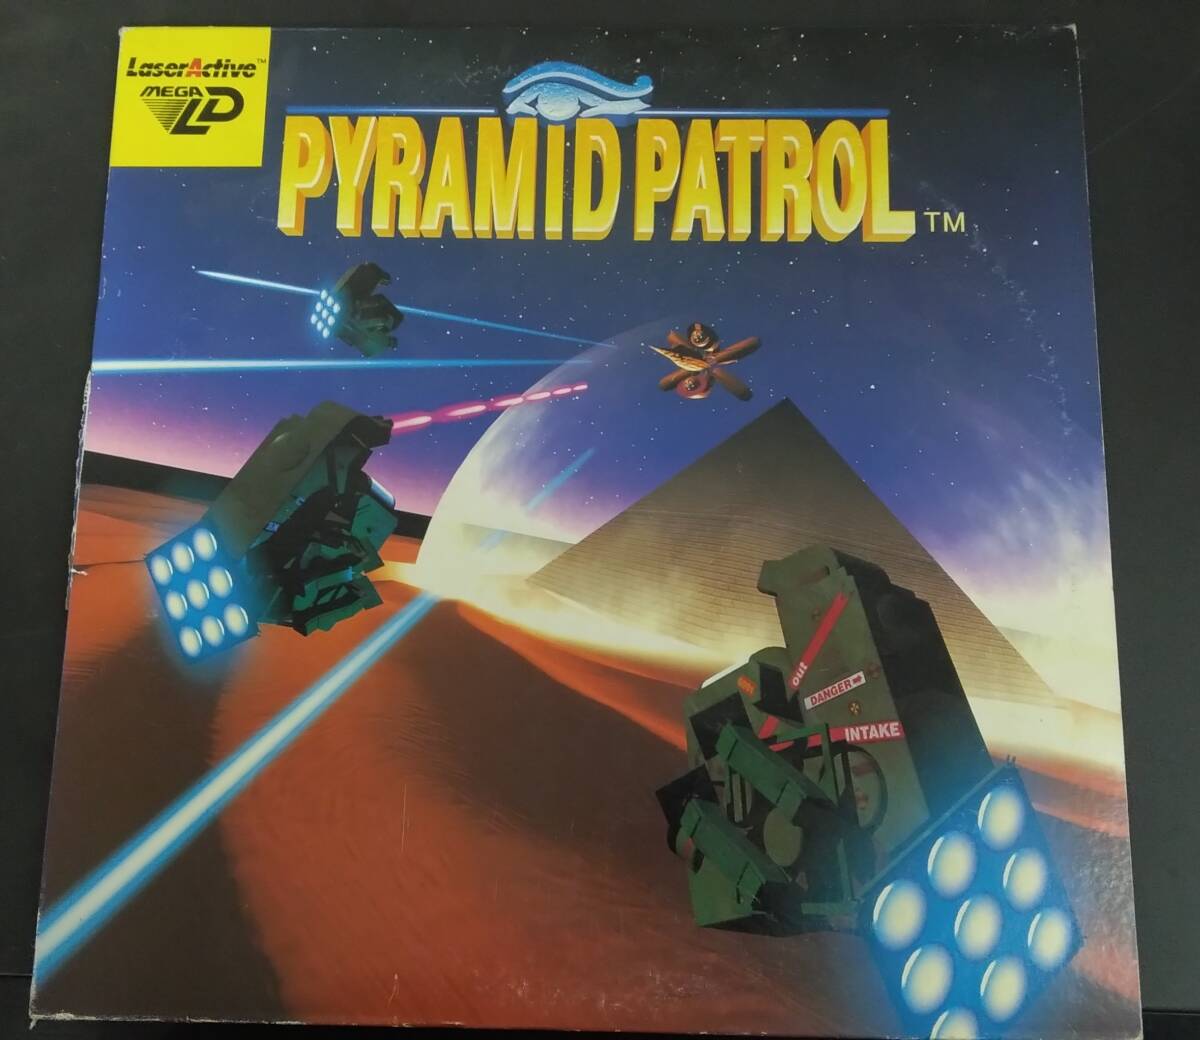 PYRAMID PATROL ピラミッドパトロール 3次元立体サウンド・3次元CG レーザーアクティブ メガLDの画像1